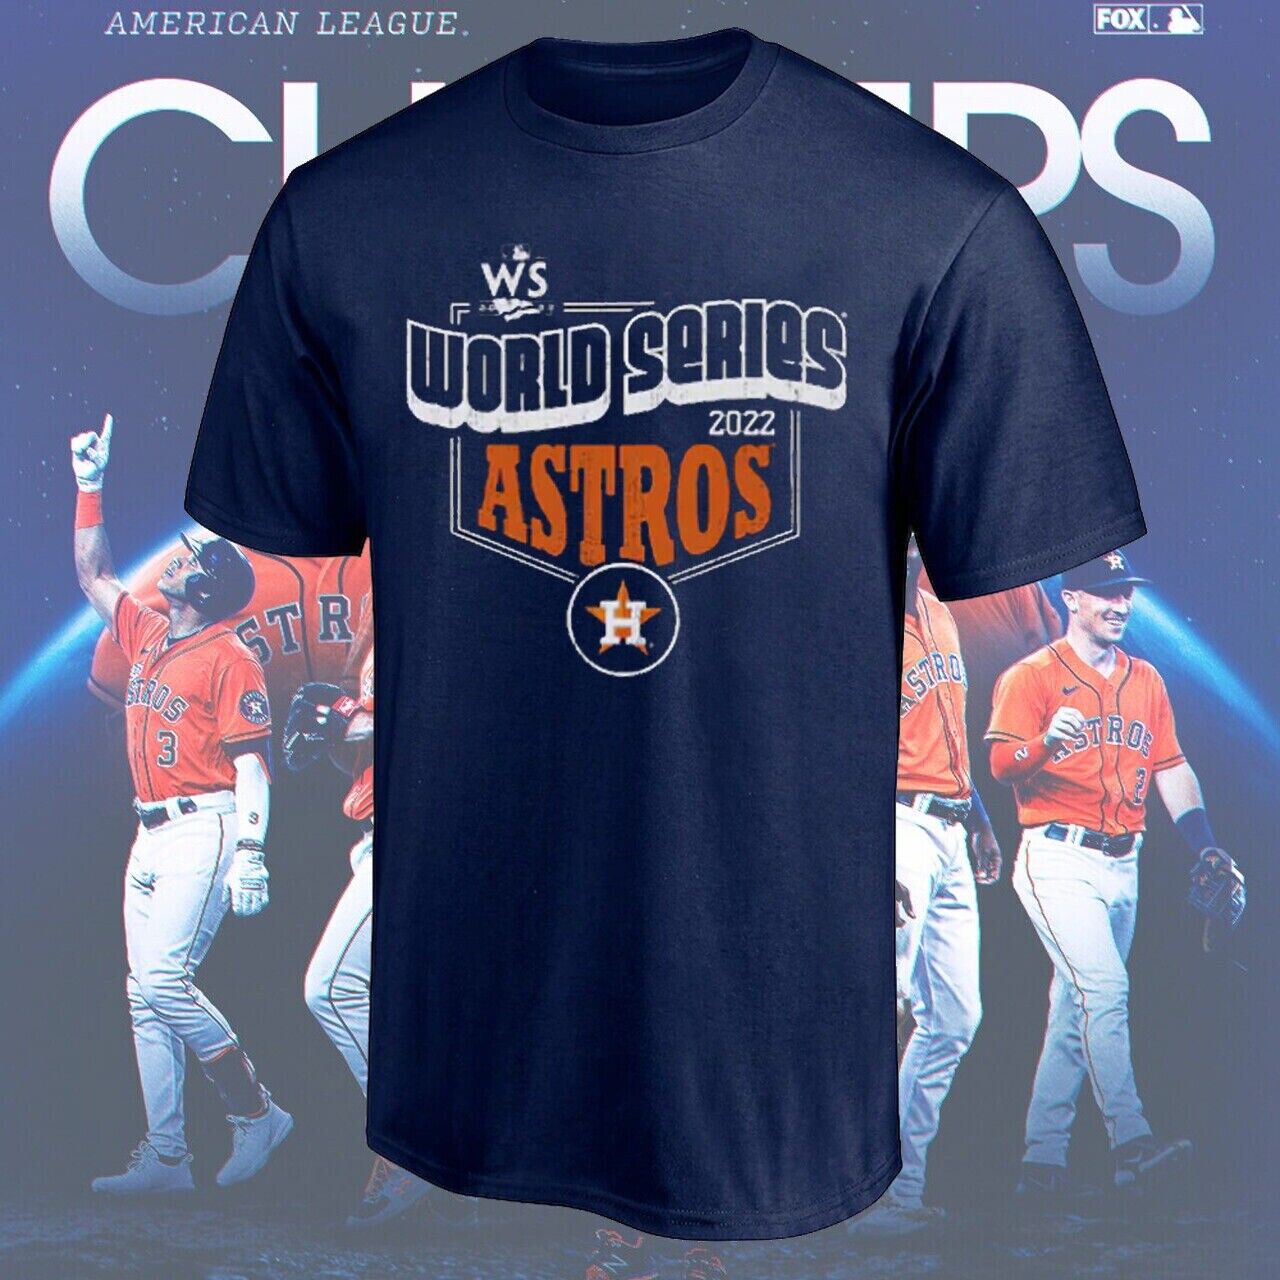 Houston Astros 2022 World Series Baseball Team T Shirt S-3xl Plus Size Up To 5xl